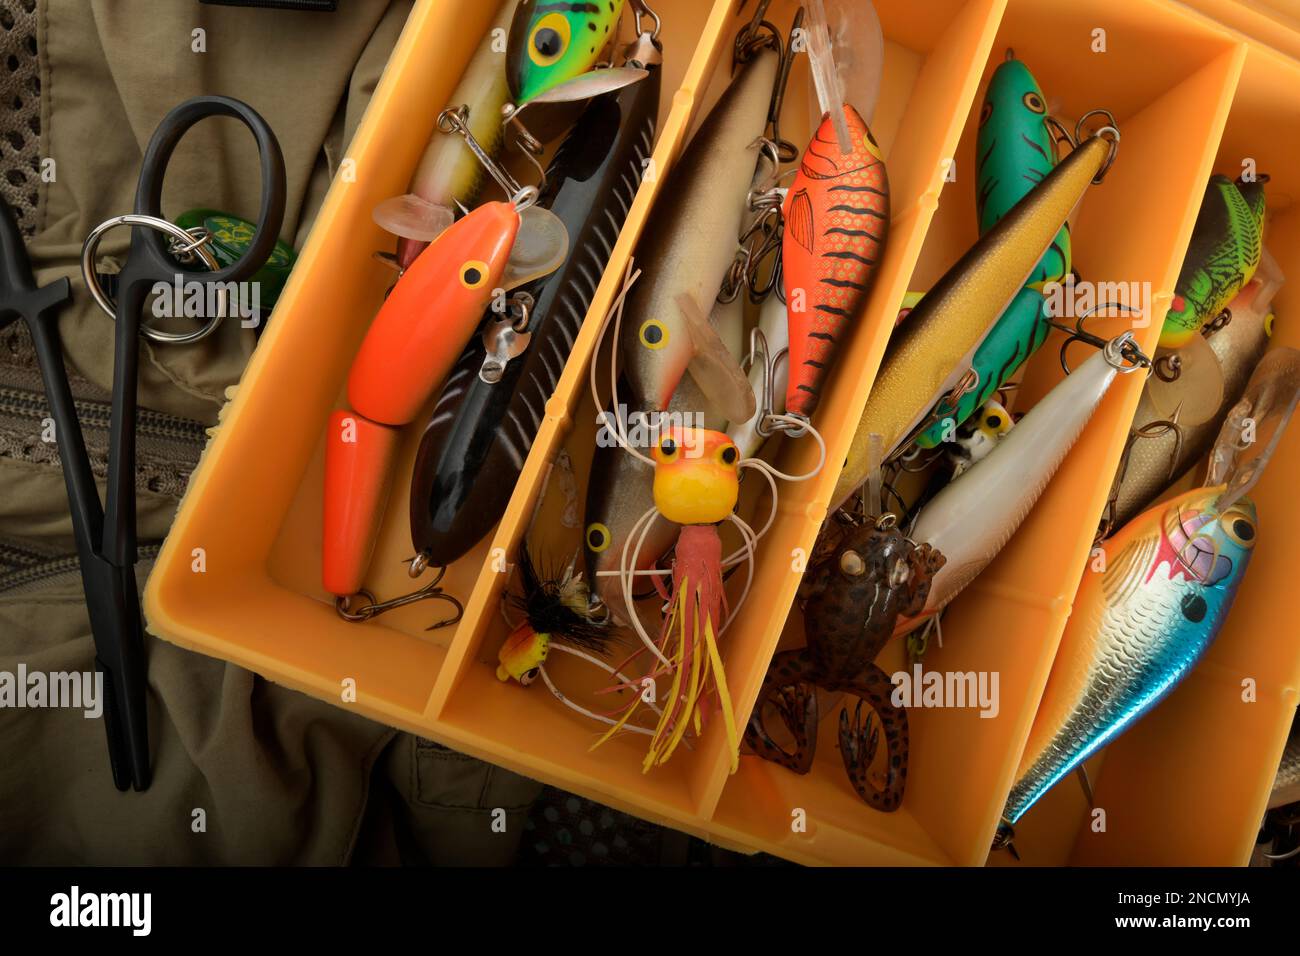 https://c8.alamy.com/comp/2NCMYJA/fishing-equipment-artificial-bait-used-to-fish-fisherman-bait-box-beautiful-background-sport-illustration-outdoor-water-sports-apparatus-items-2NCMYJA.jpg